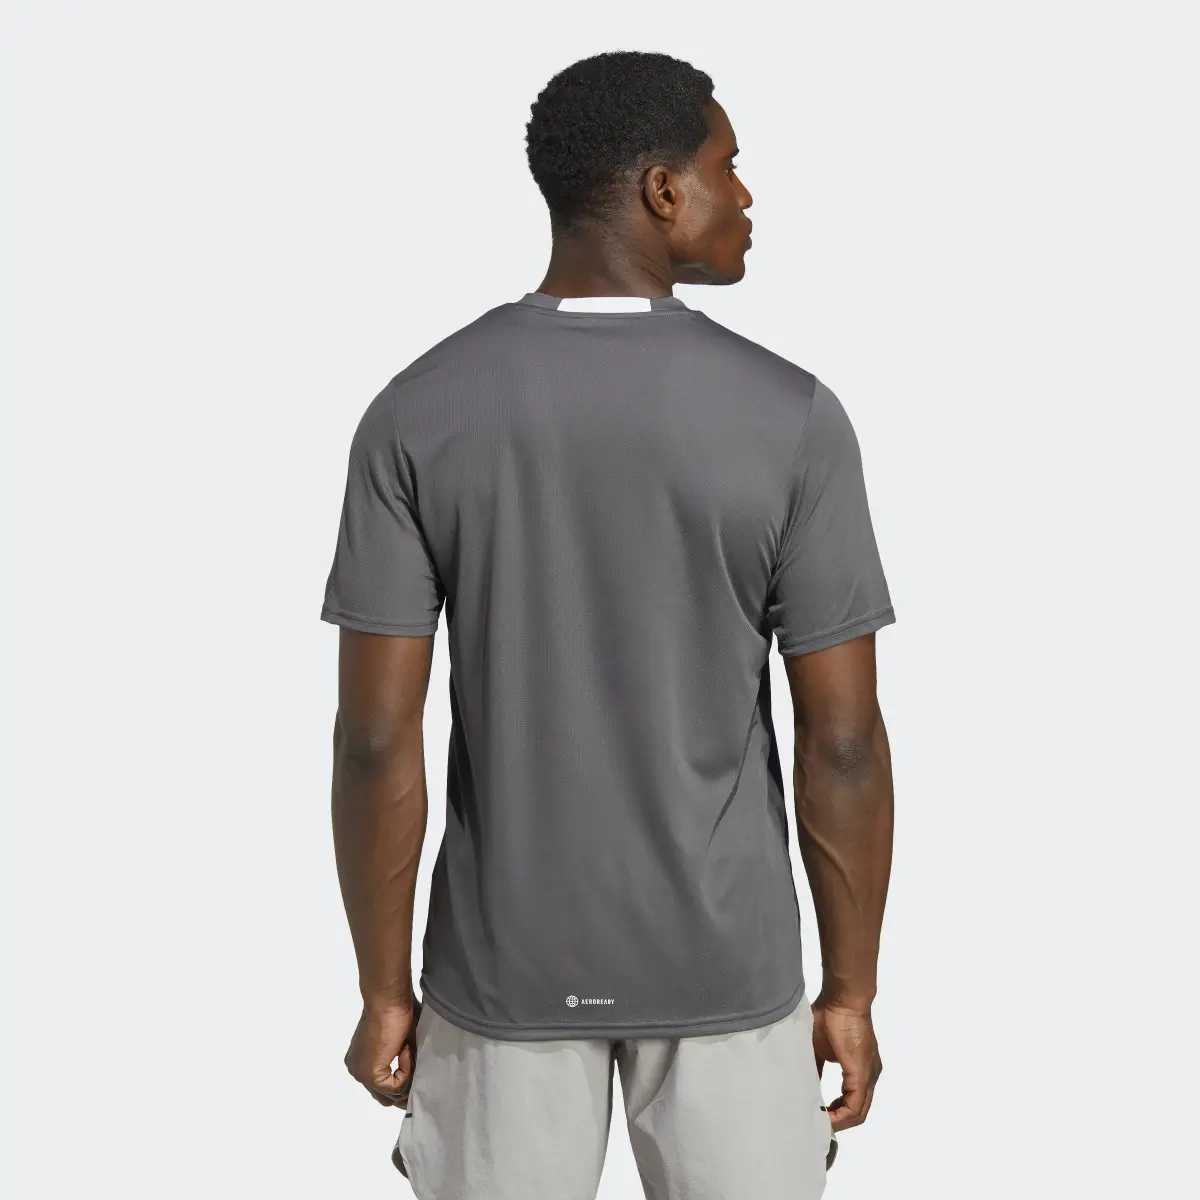 Adidas T-shirt AEROREADY Designed for Movement. 3